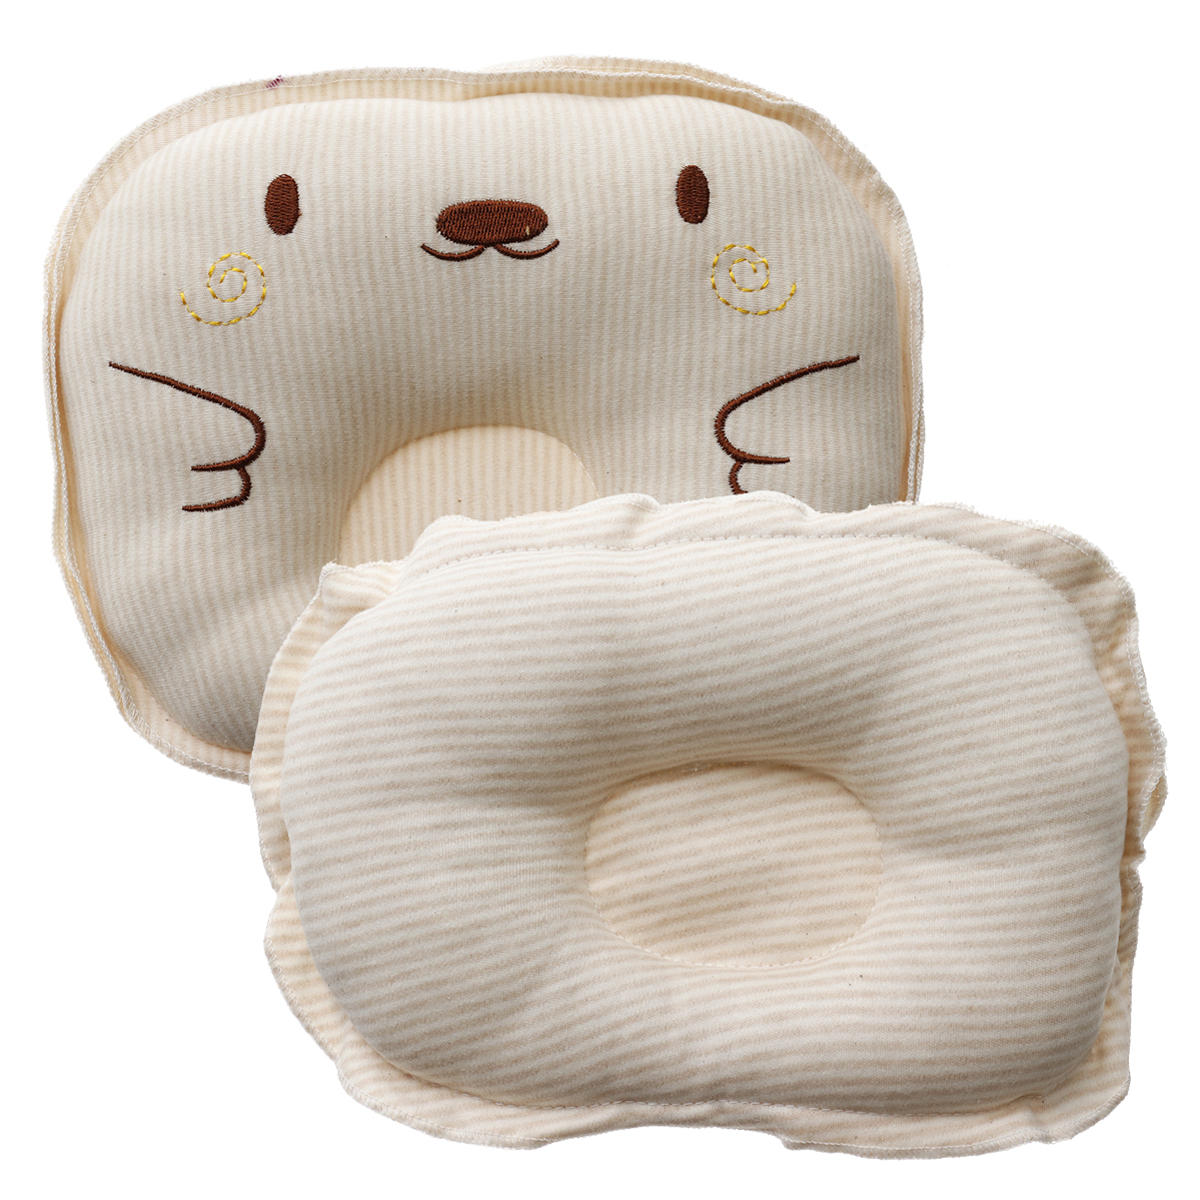 Baby Infant Newborn Memory Foam Pillow Prevent Flat Head Positioner Soft